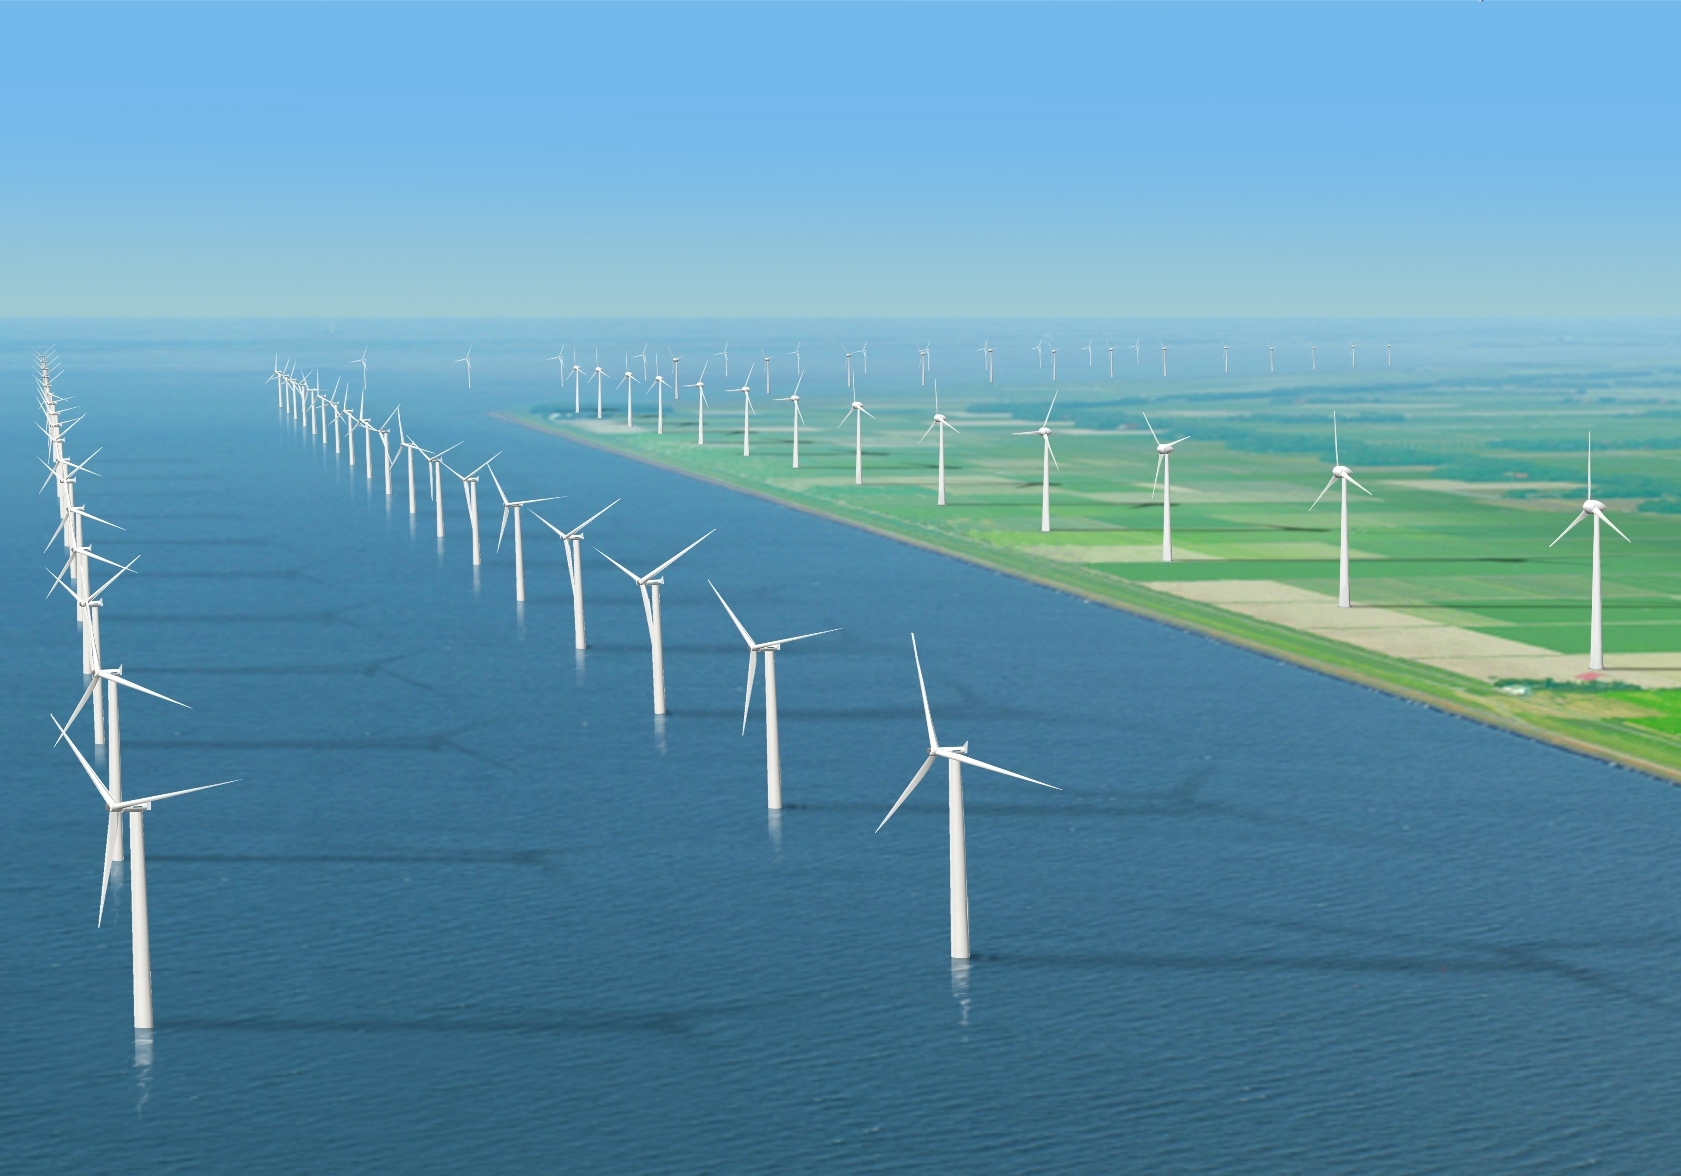 Workshop on New Wind Farm Software to Be Held in Den Helder